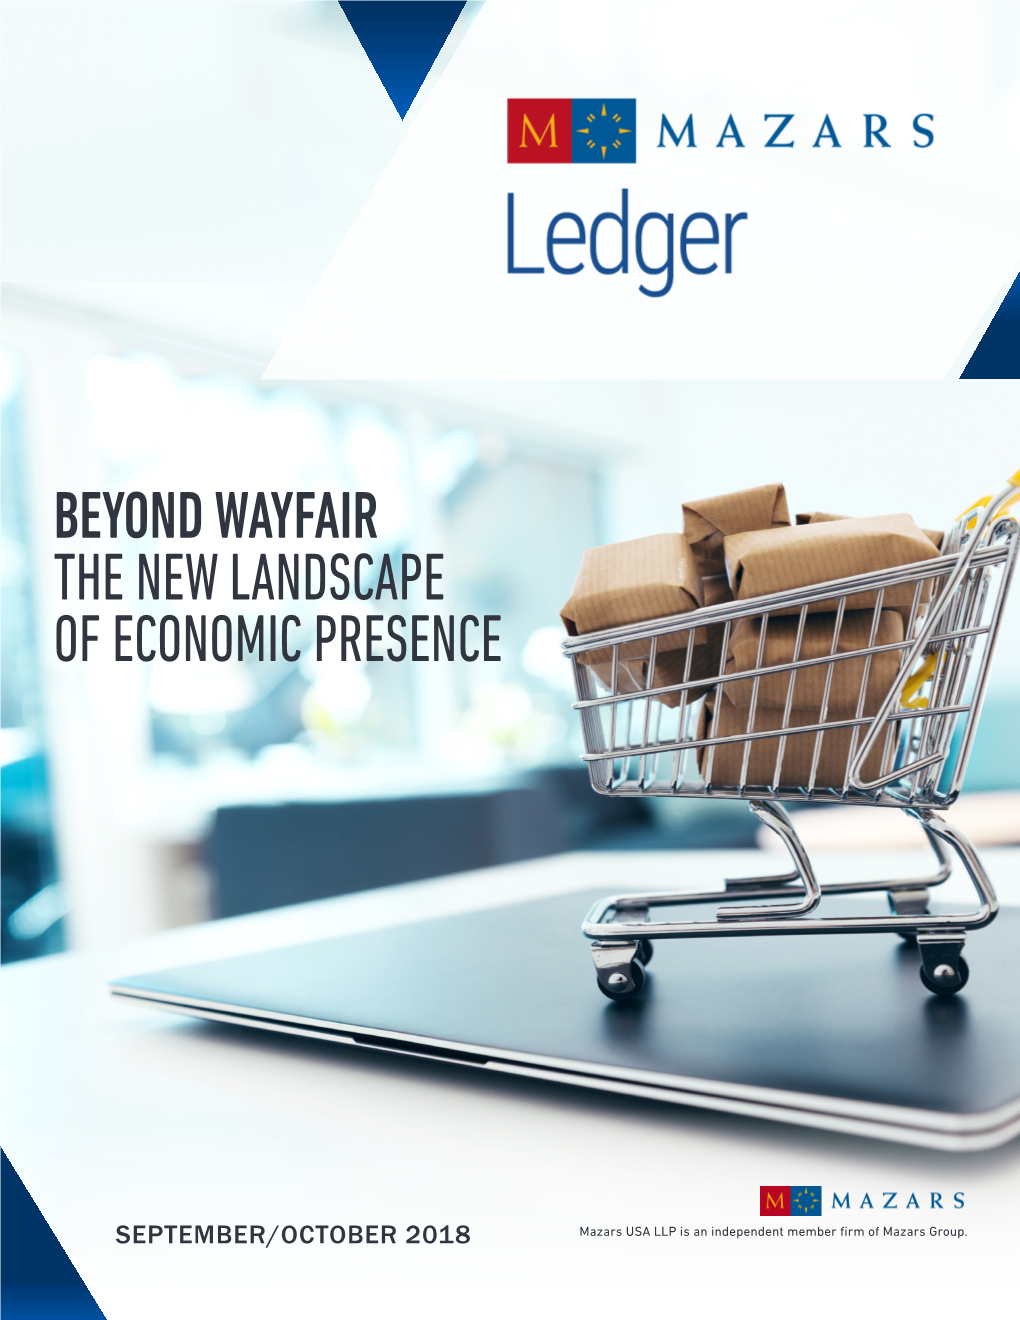 Beyond Wayfair the New Landscape of Economic Presence